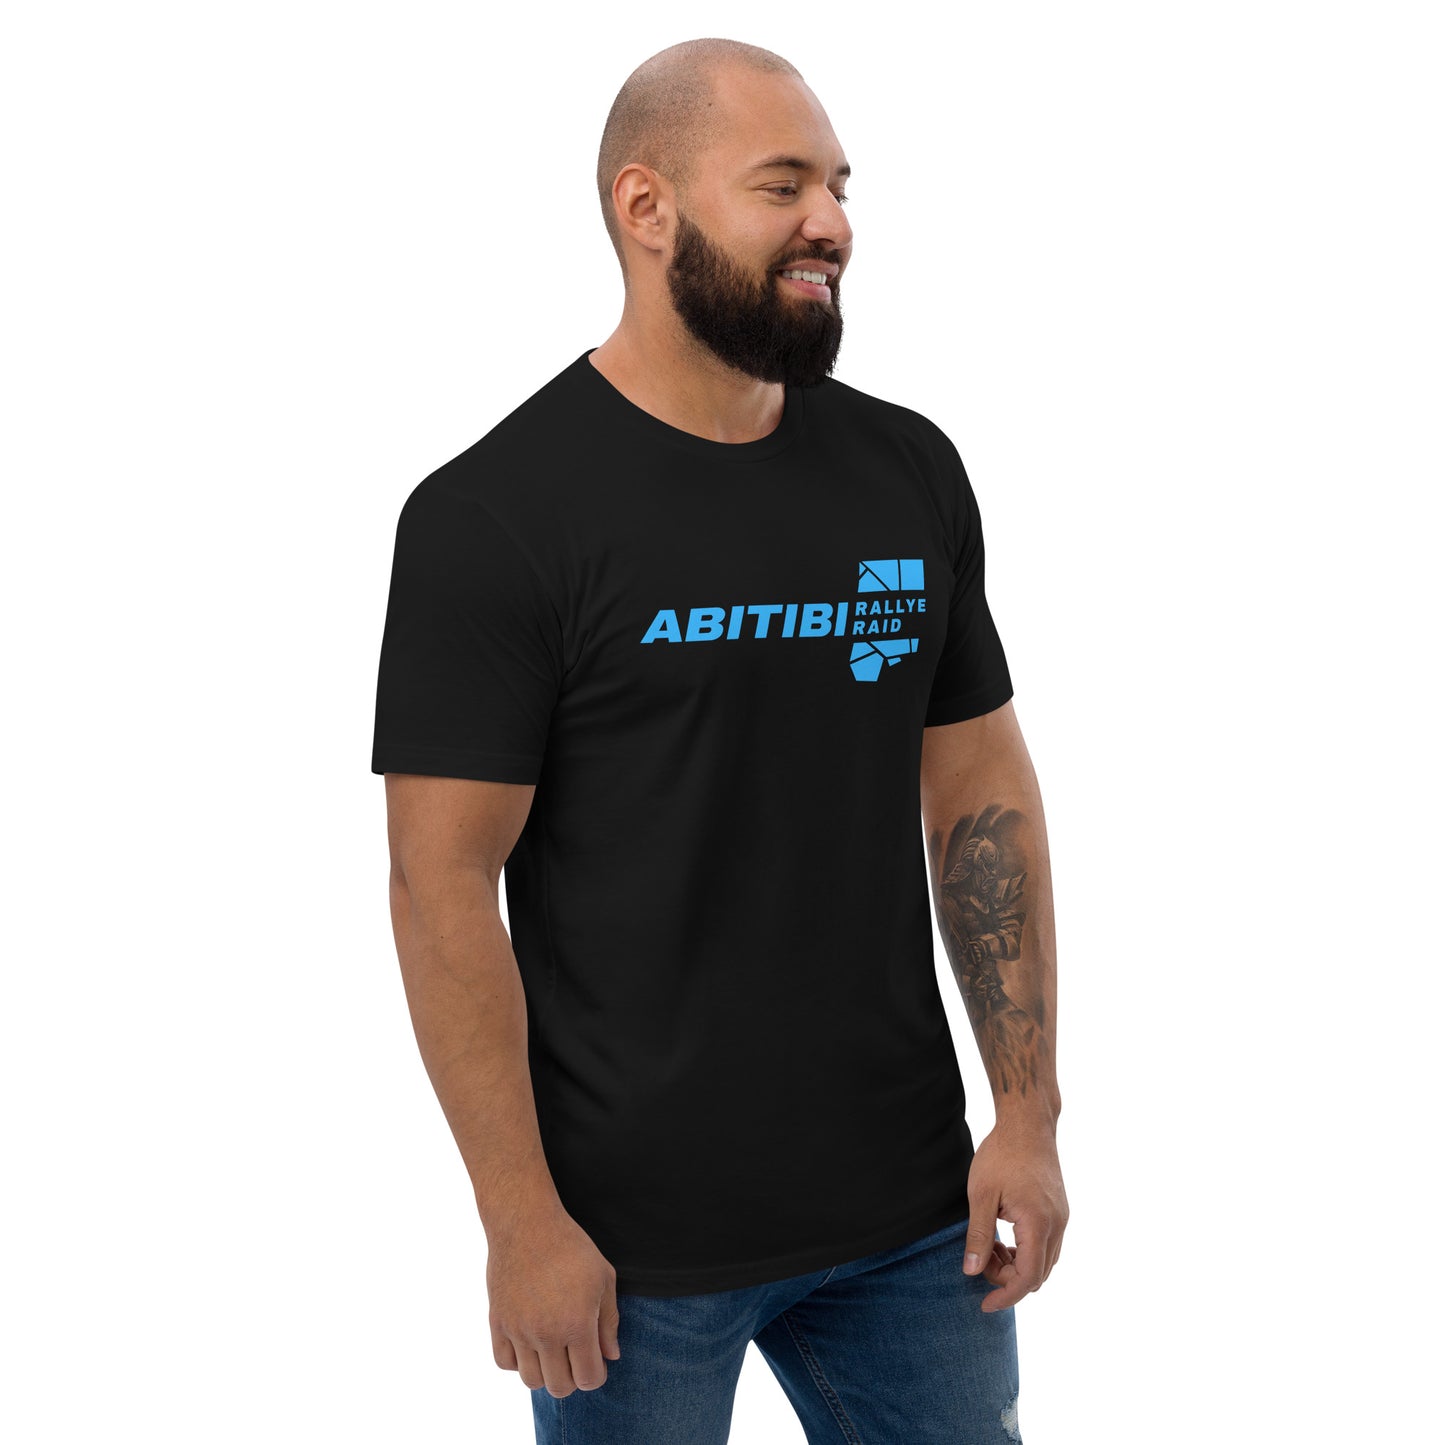 T-shirt | Next level | Rallye raid Abitibi